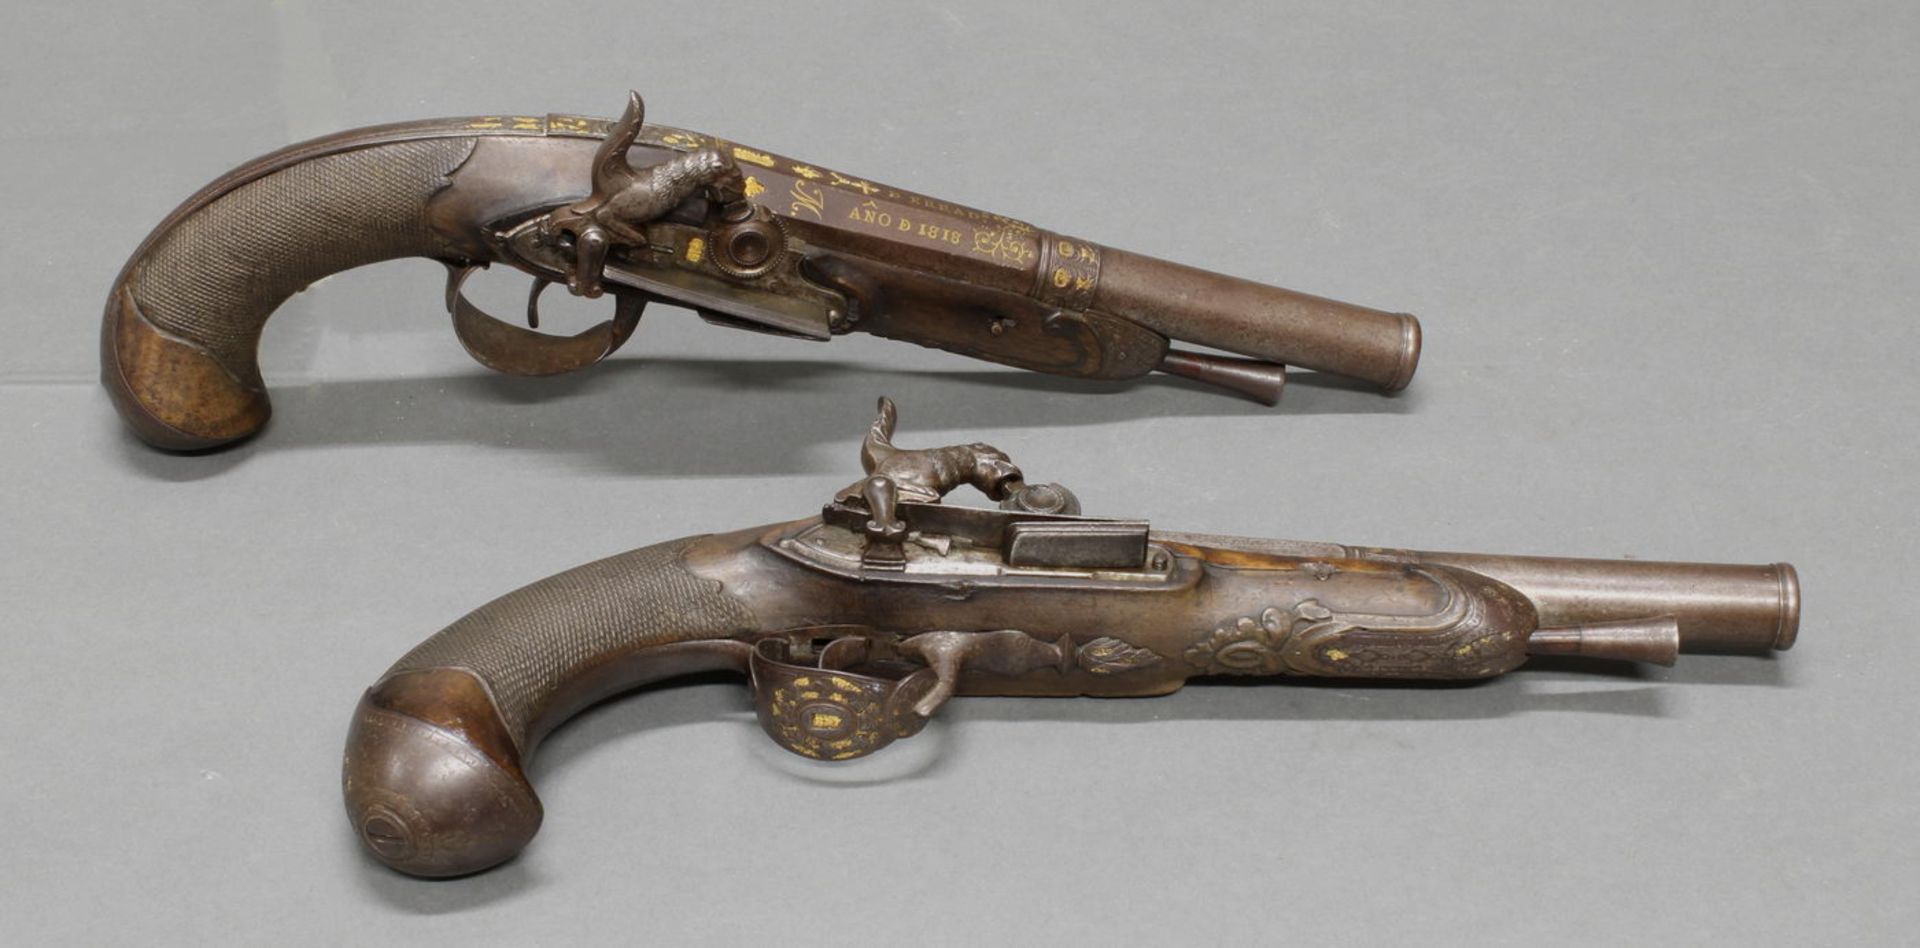 Paar Perkussions-Pistolen, Spanien, signiert und datiert D ERRAD(s) EN EIBAR, ANO D 1818, wohl Besi